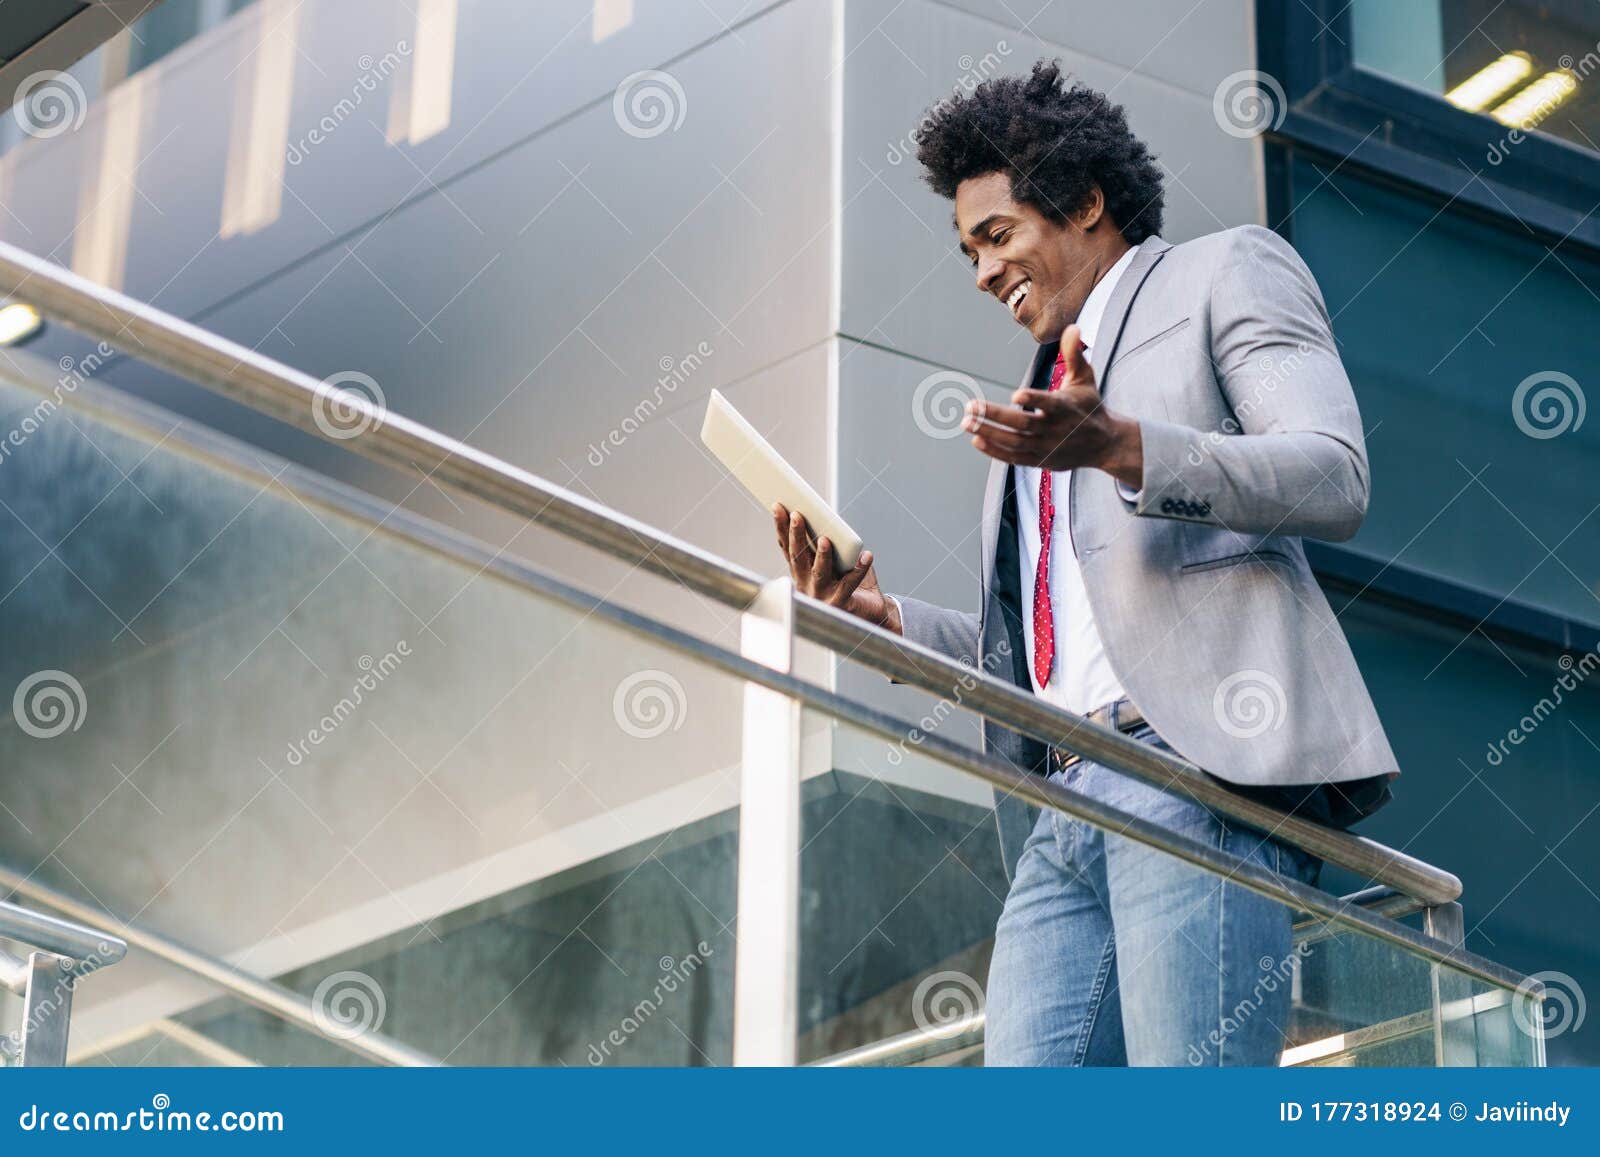 black businessman using a digital tablet sitting near an office building.